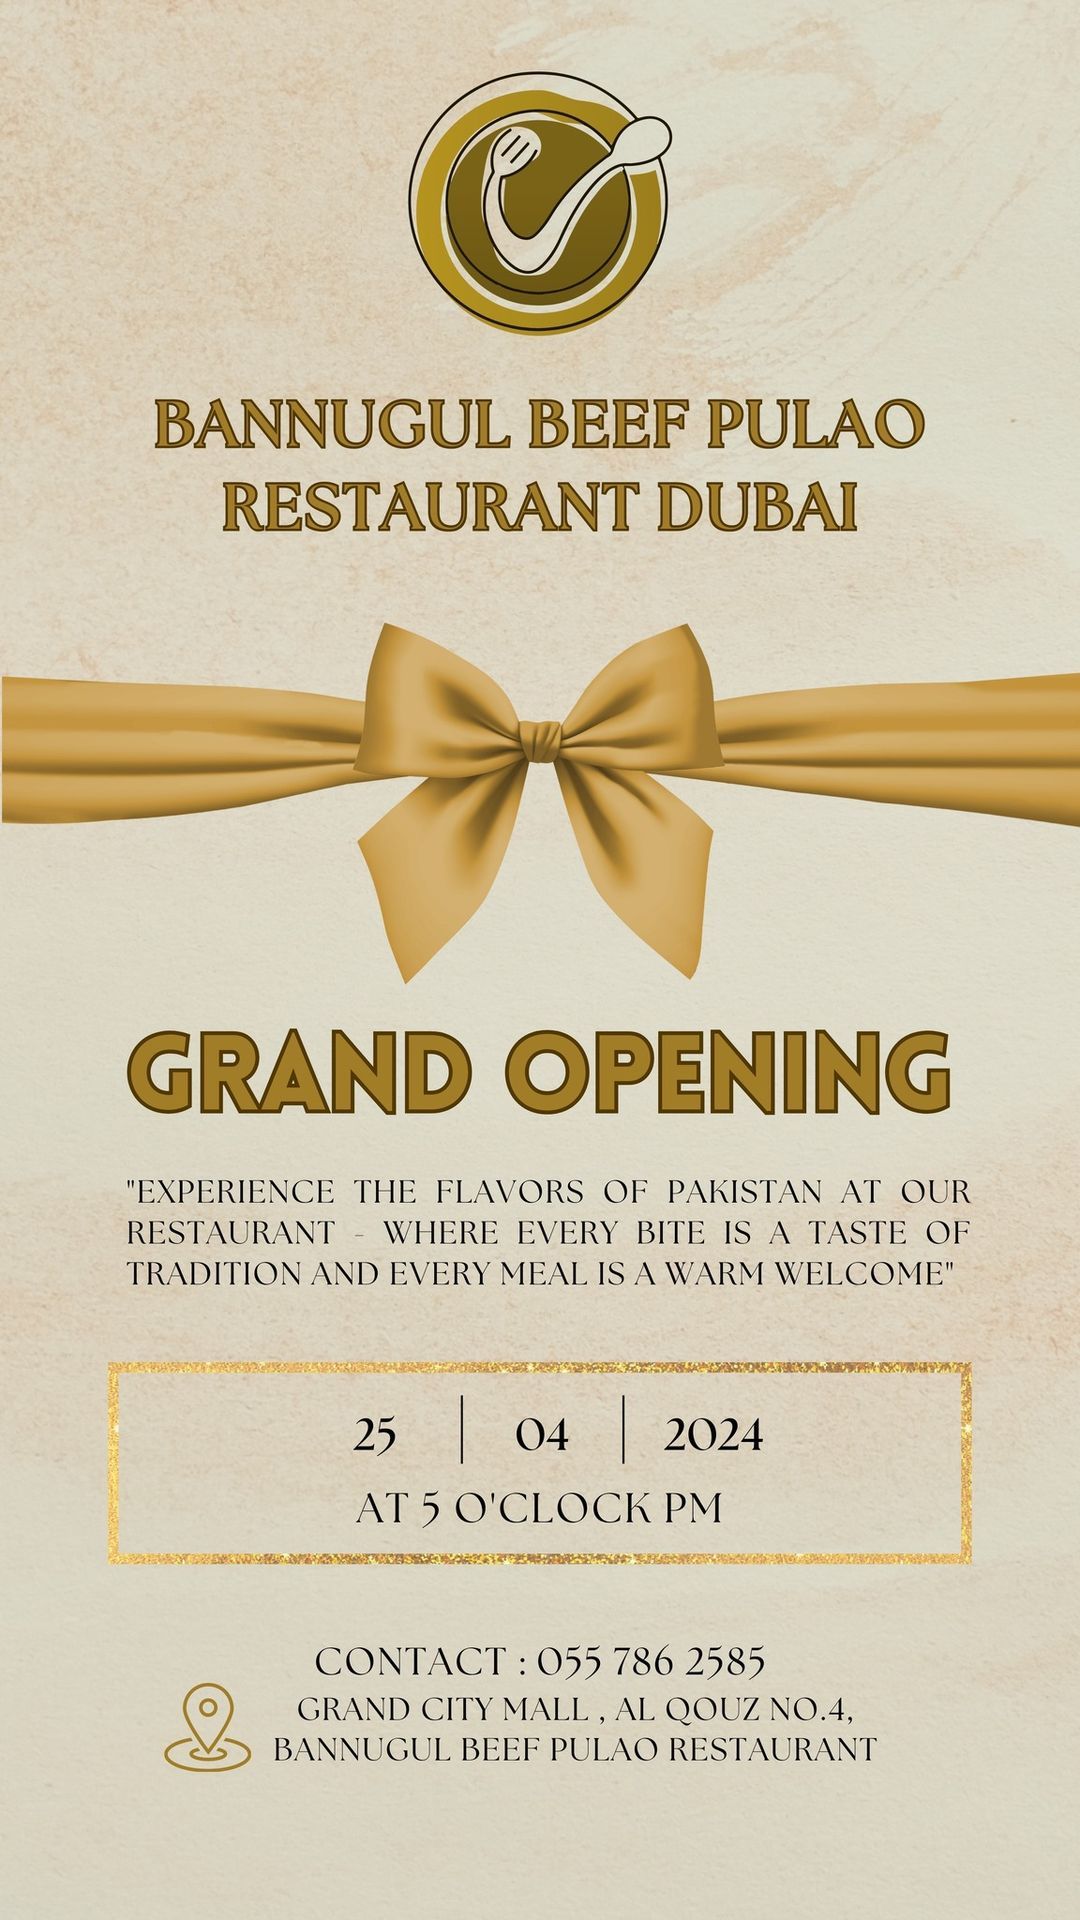 Grand opening of bannugul Dubai branch